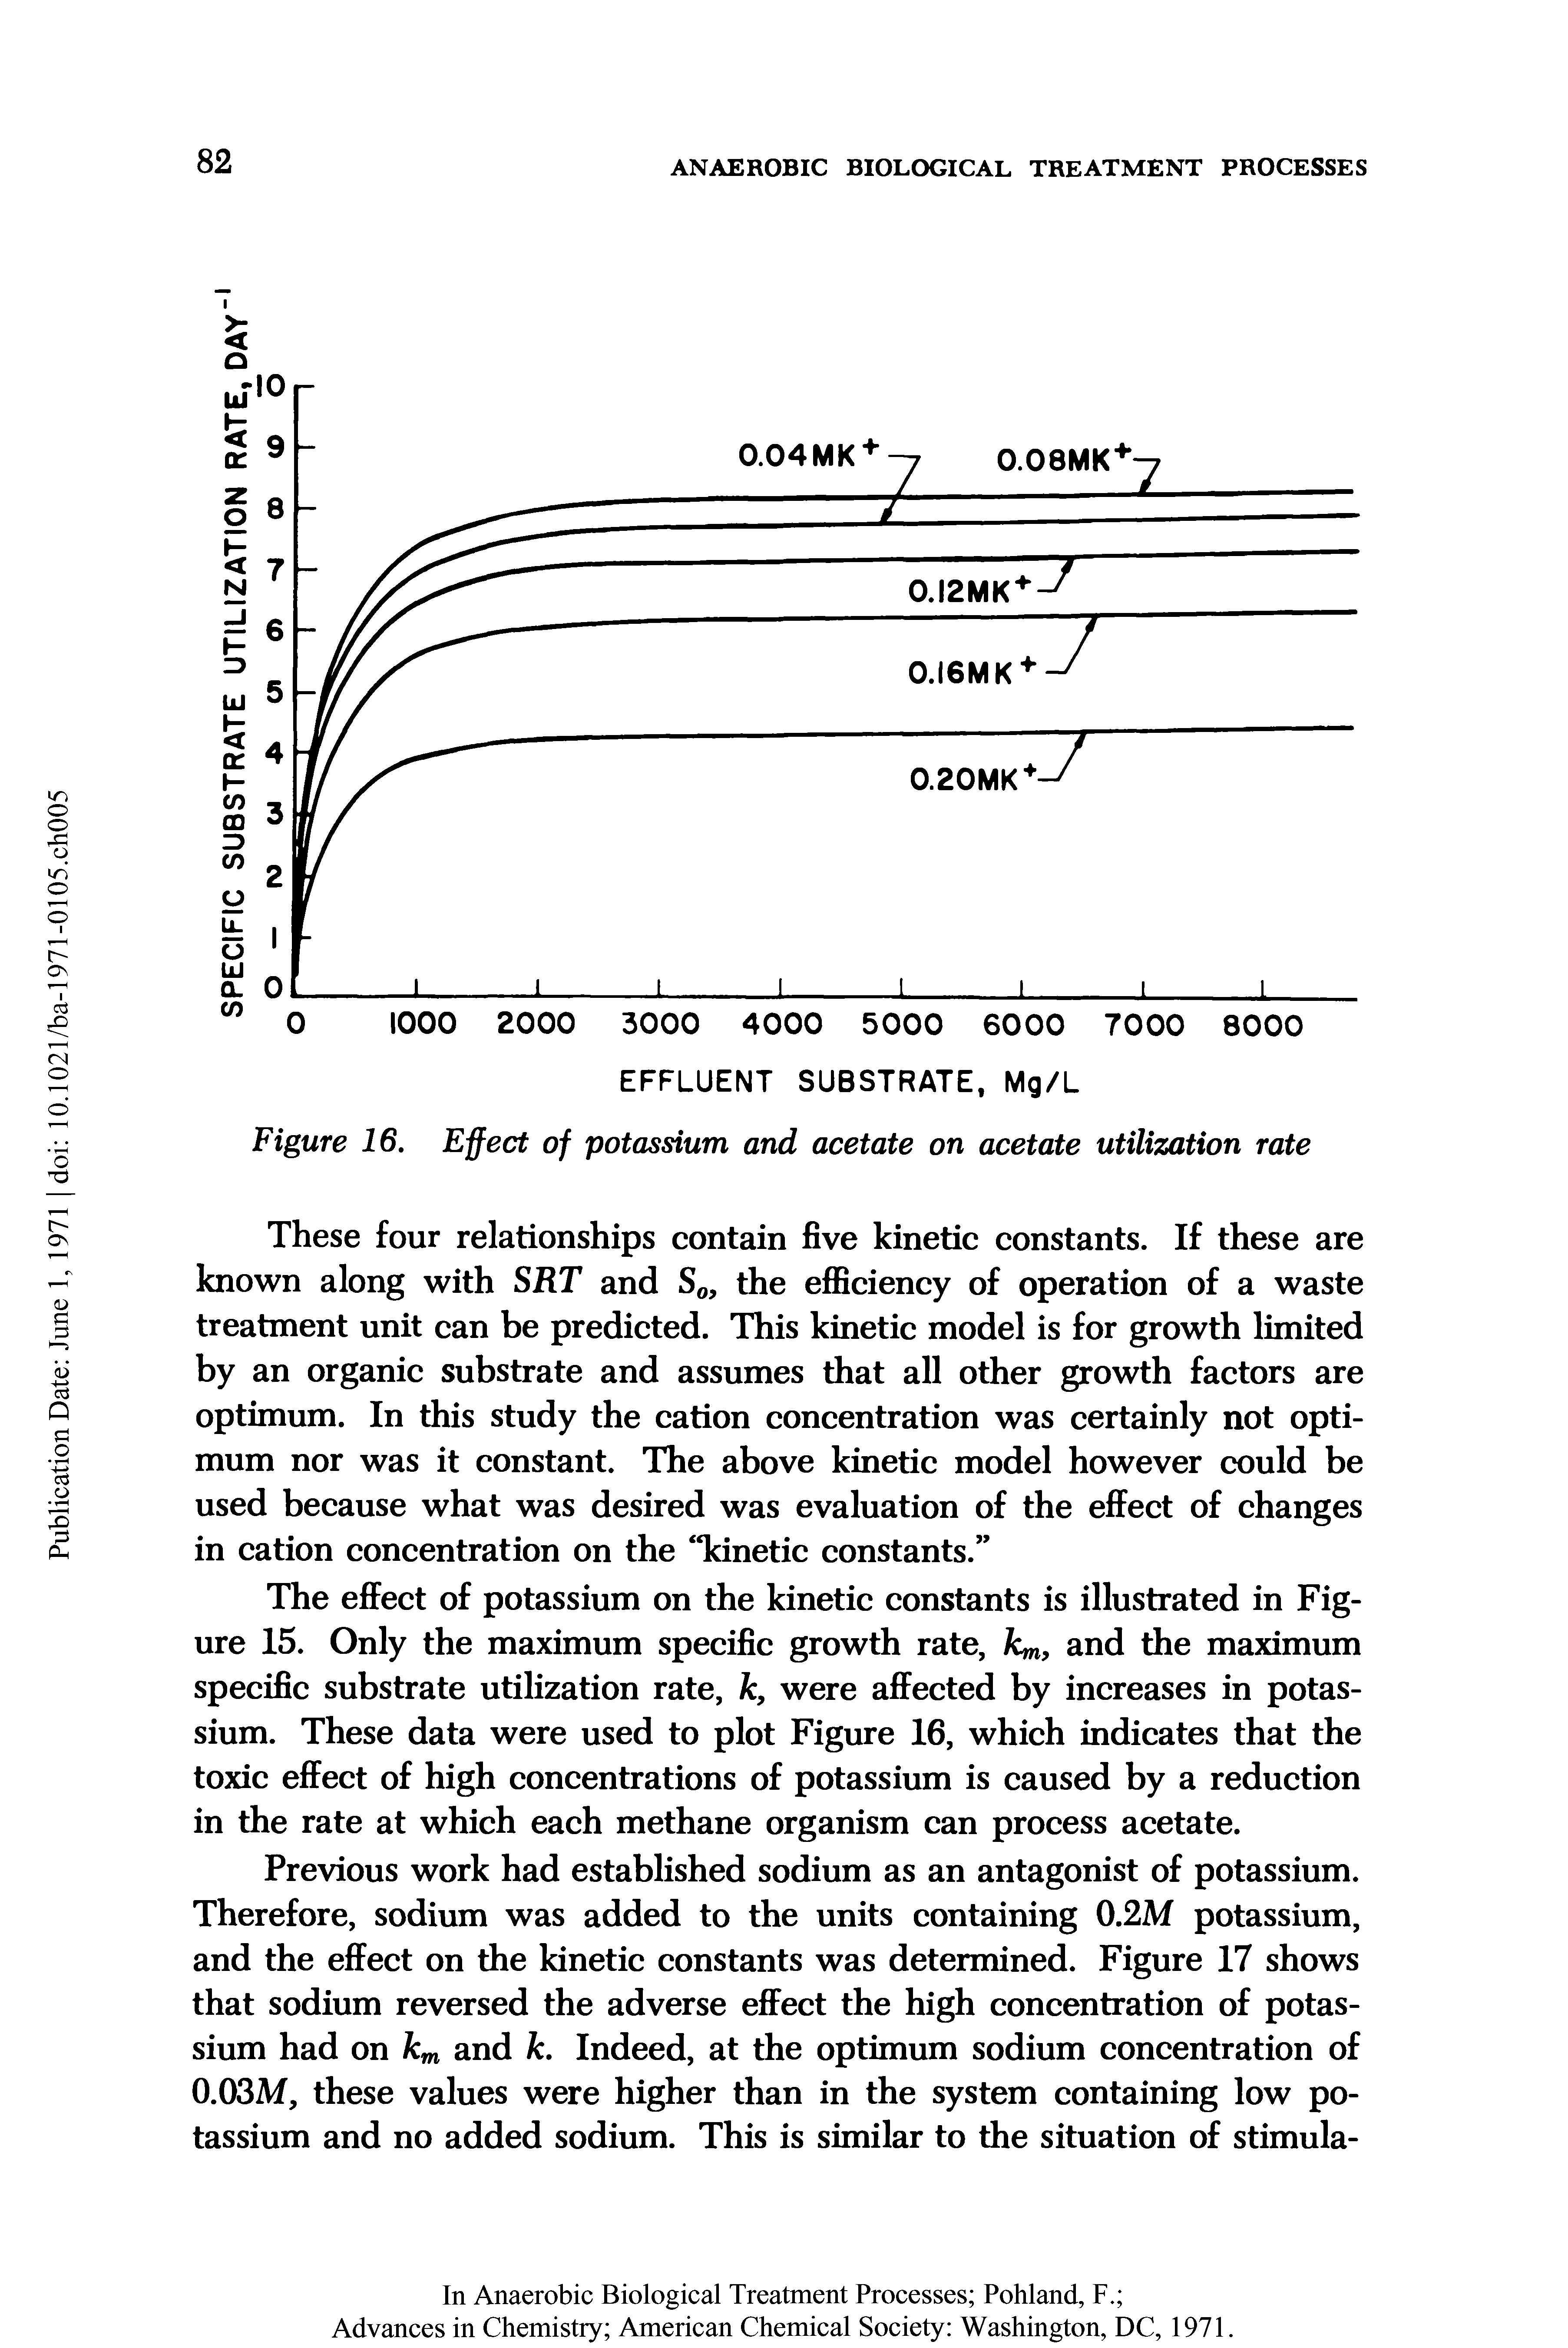 Figure 16. Effect of potassium and acetate on acetate utilization rate...